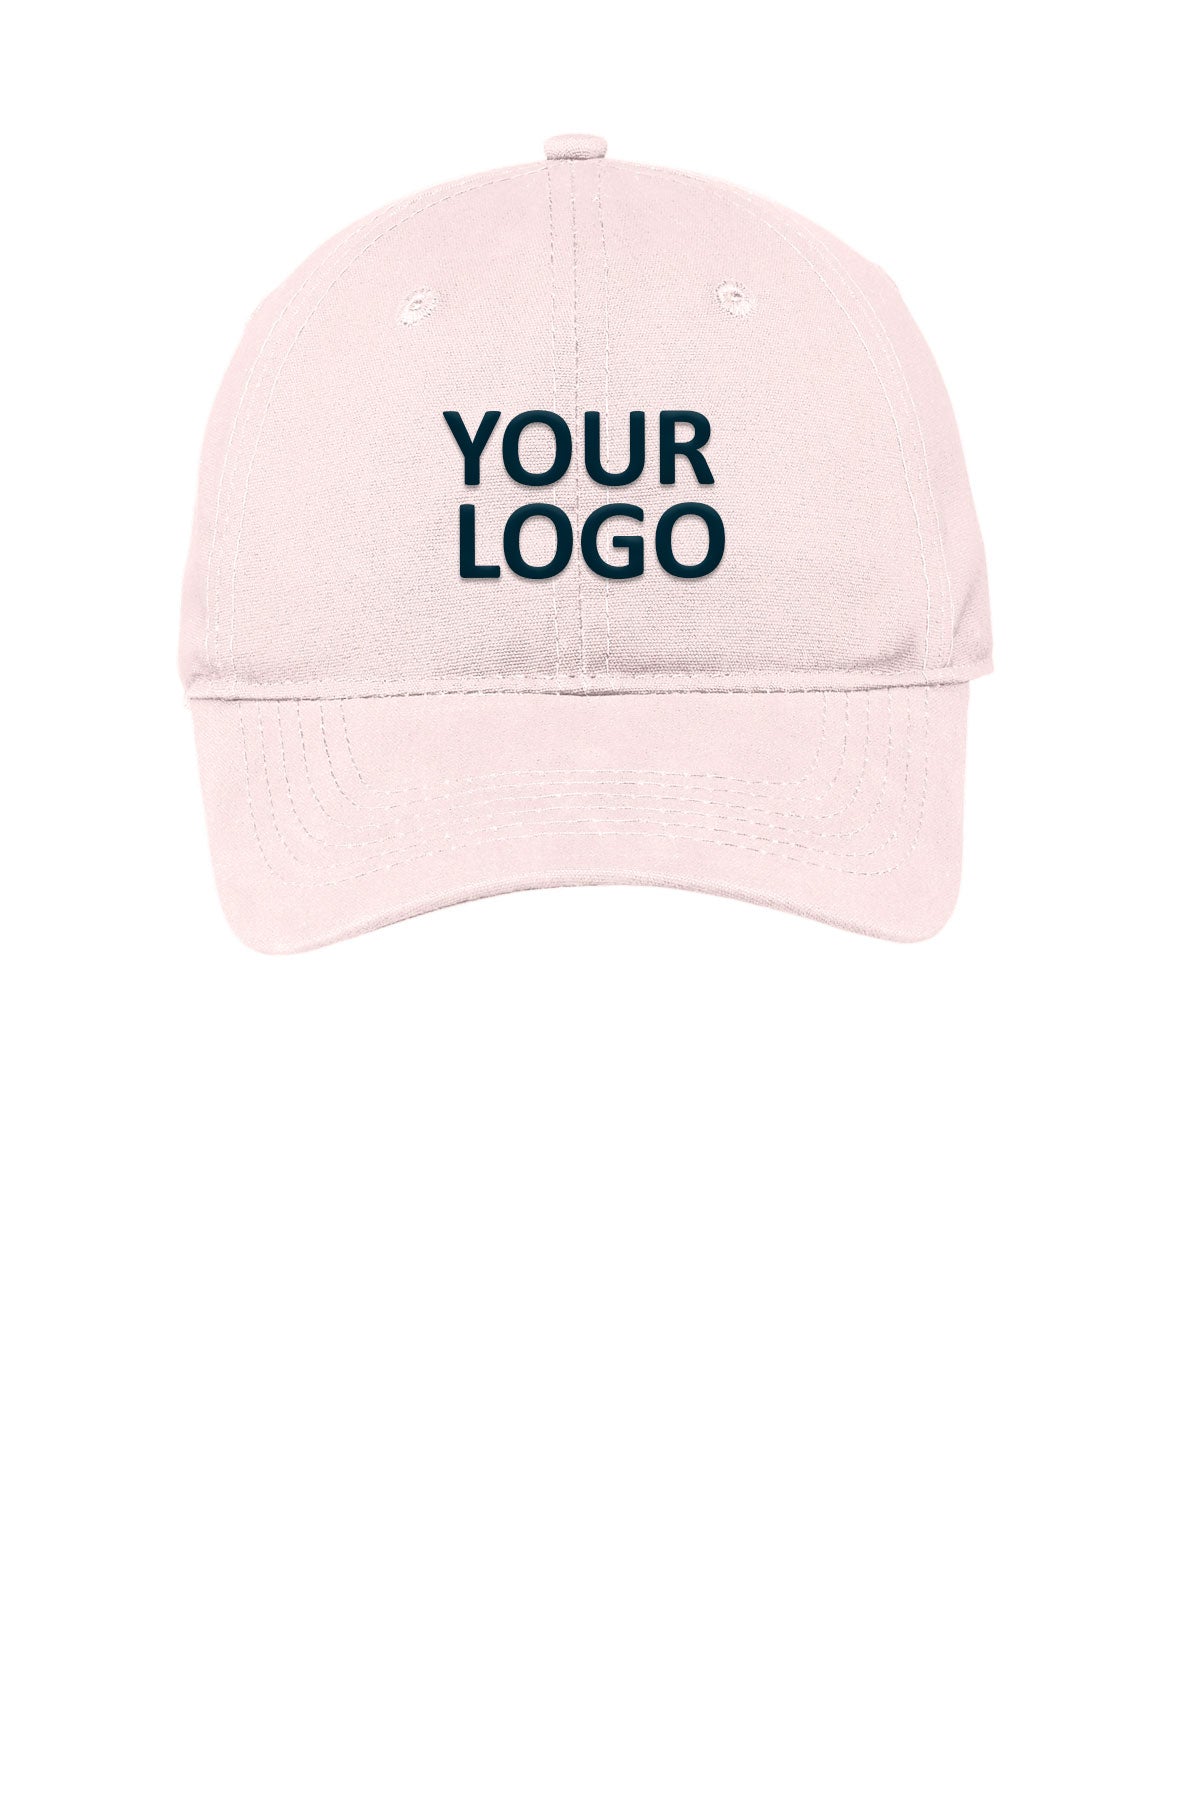 Port & Company Soft Brushed Custom Canvas Caps, Light Pink